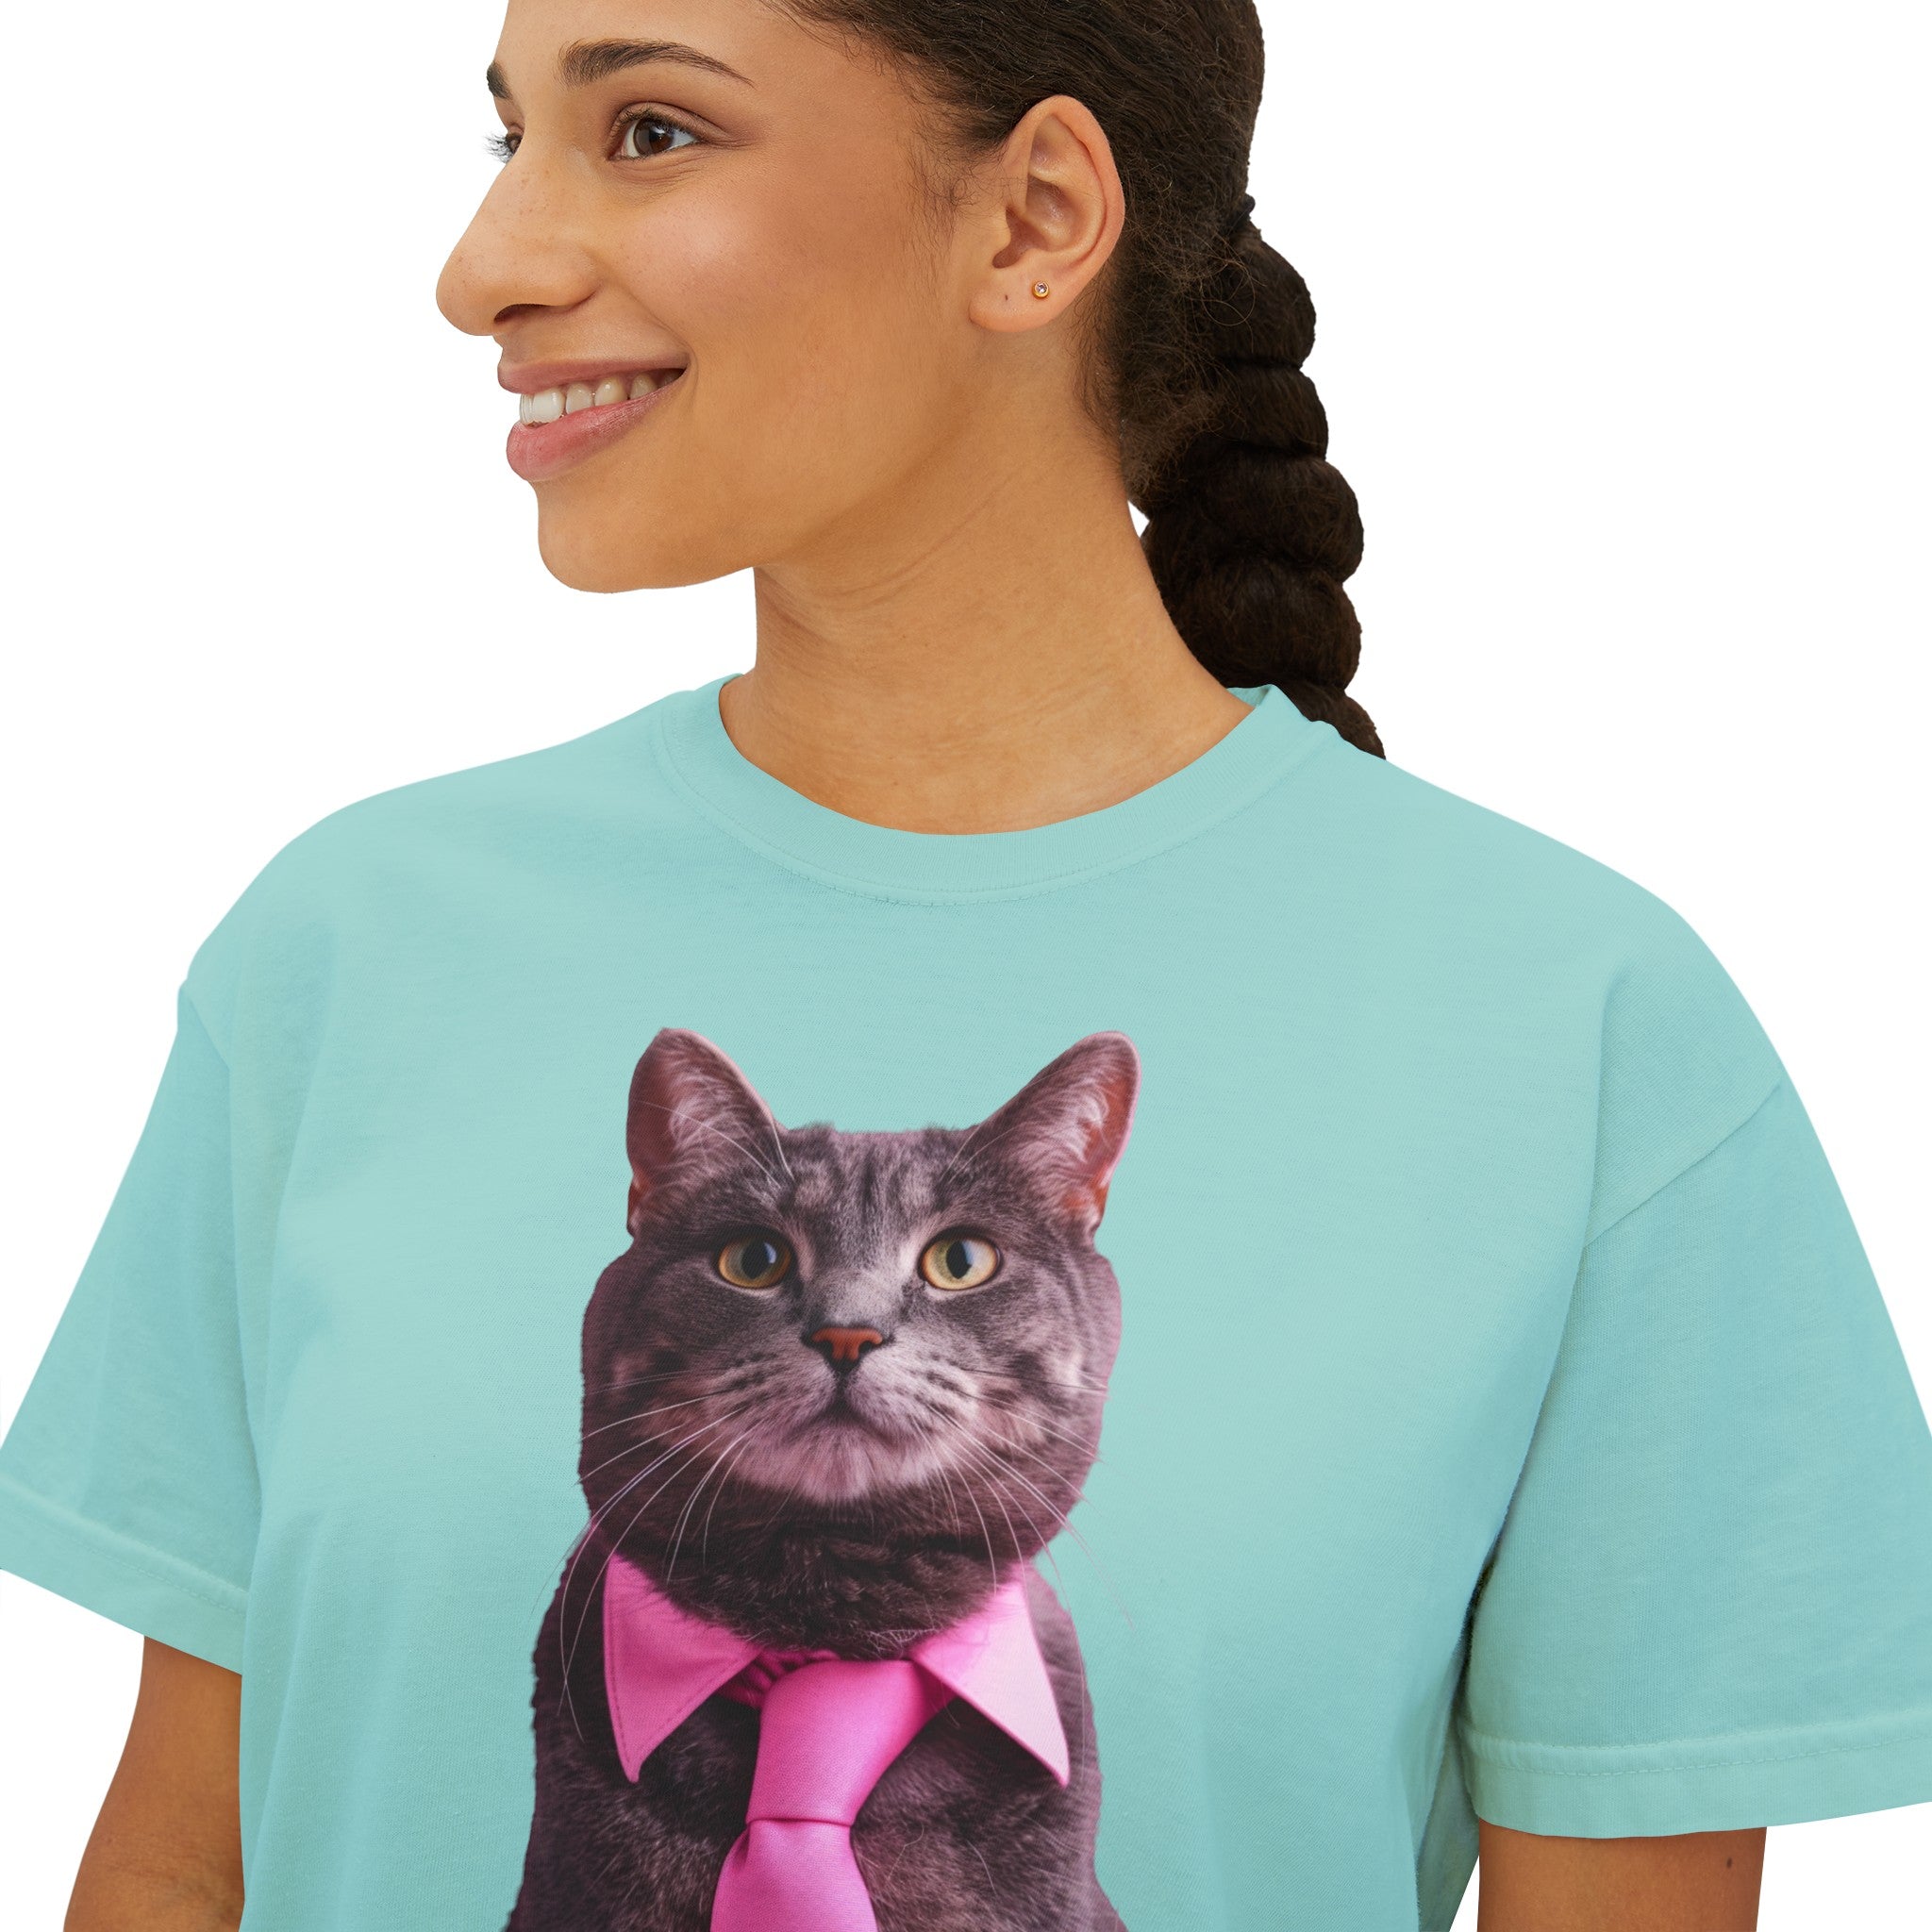 Purr-fectly Dapper: Pink Tie Tabby Cat Chic Women's Boxy Tee - Elegant Feline Fashion for the Modern Cat Lover